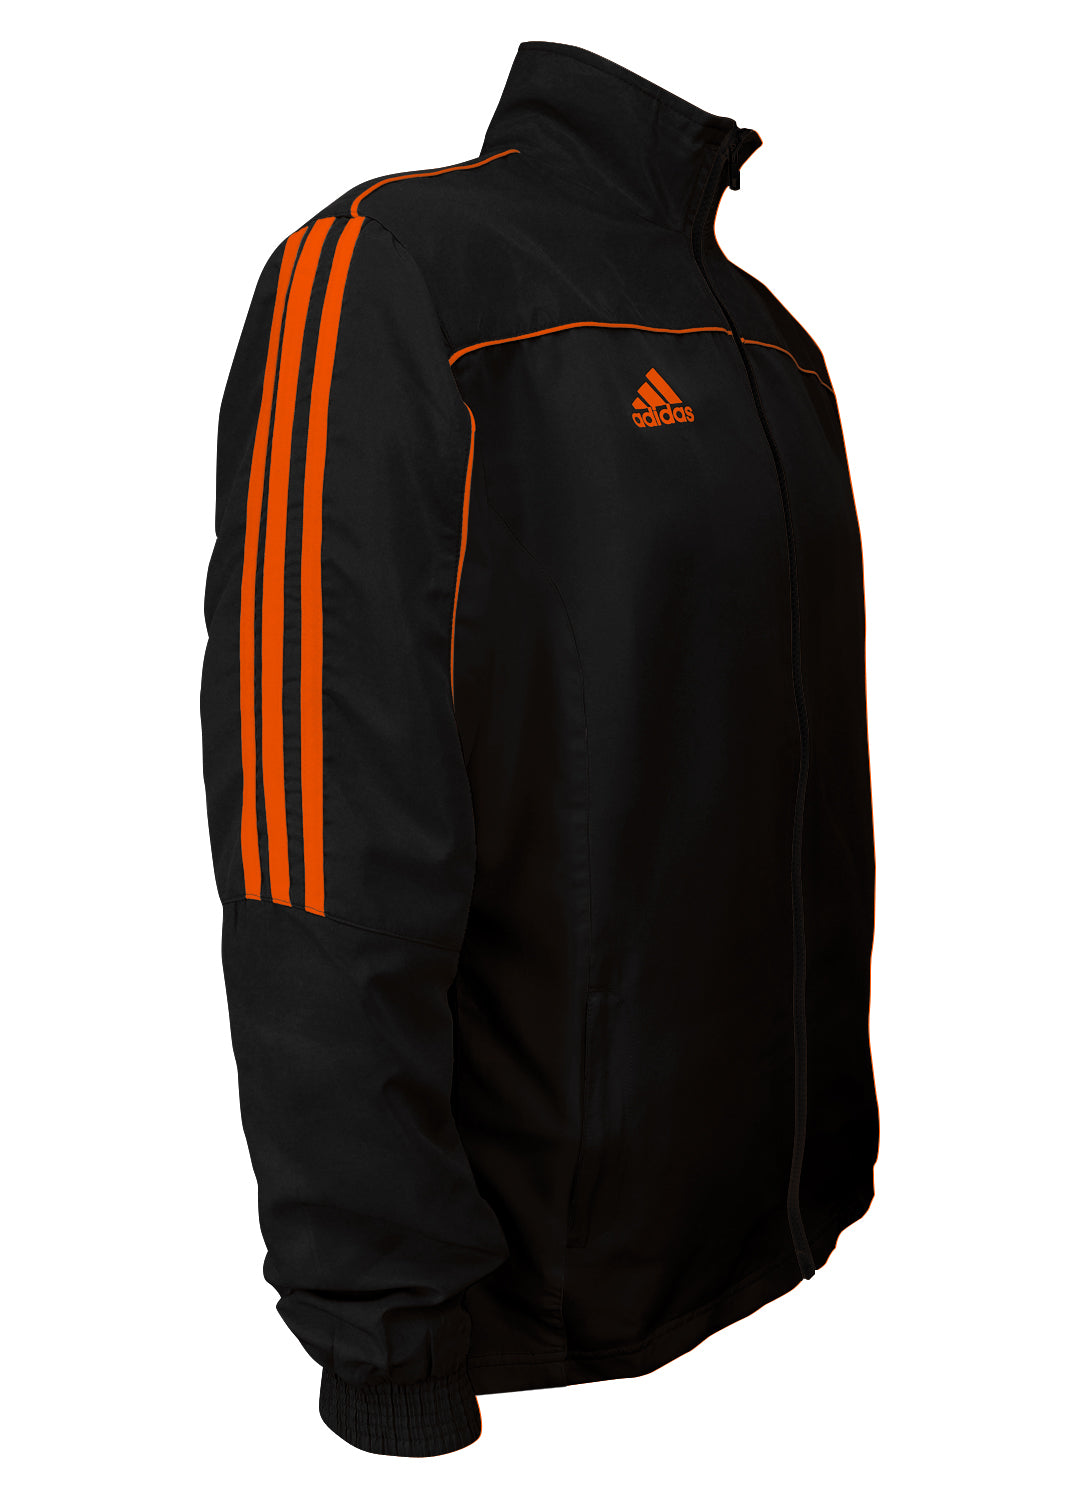 adidas Black with Neon Orange Stripes Windbreaker Style Team Jacket Side View